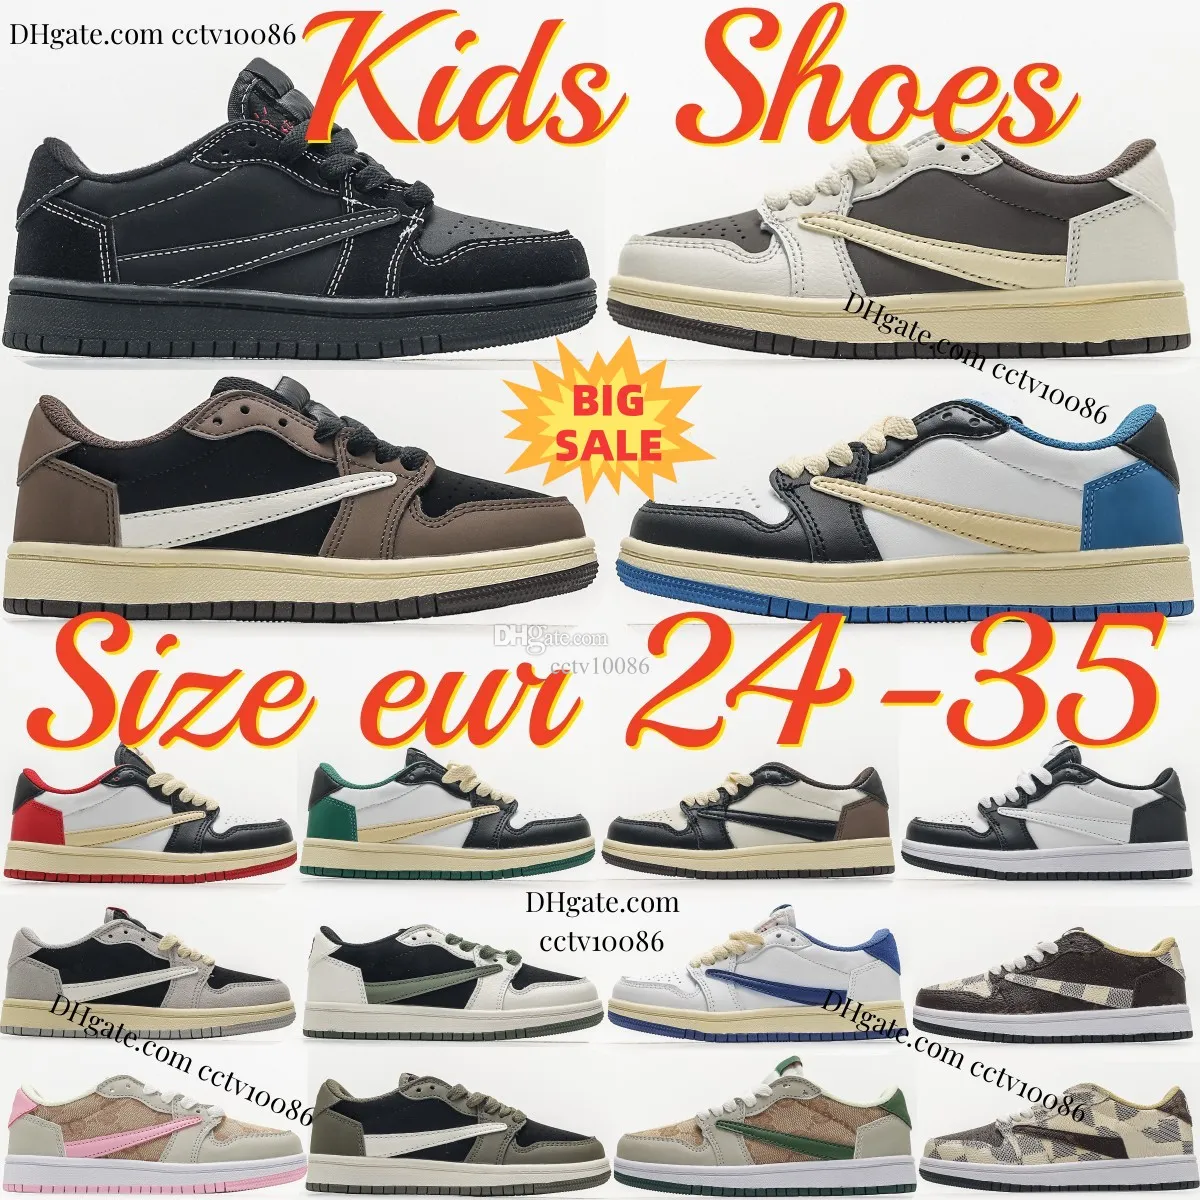 Shoes Kids 1 Designer 1s Low Basketball Sneakers Boys Kid Youth Toddler OG Shoe Girls Baby Children Reverse Mocha Trainers Olive Black Phantom Fragment size EUR 24-35